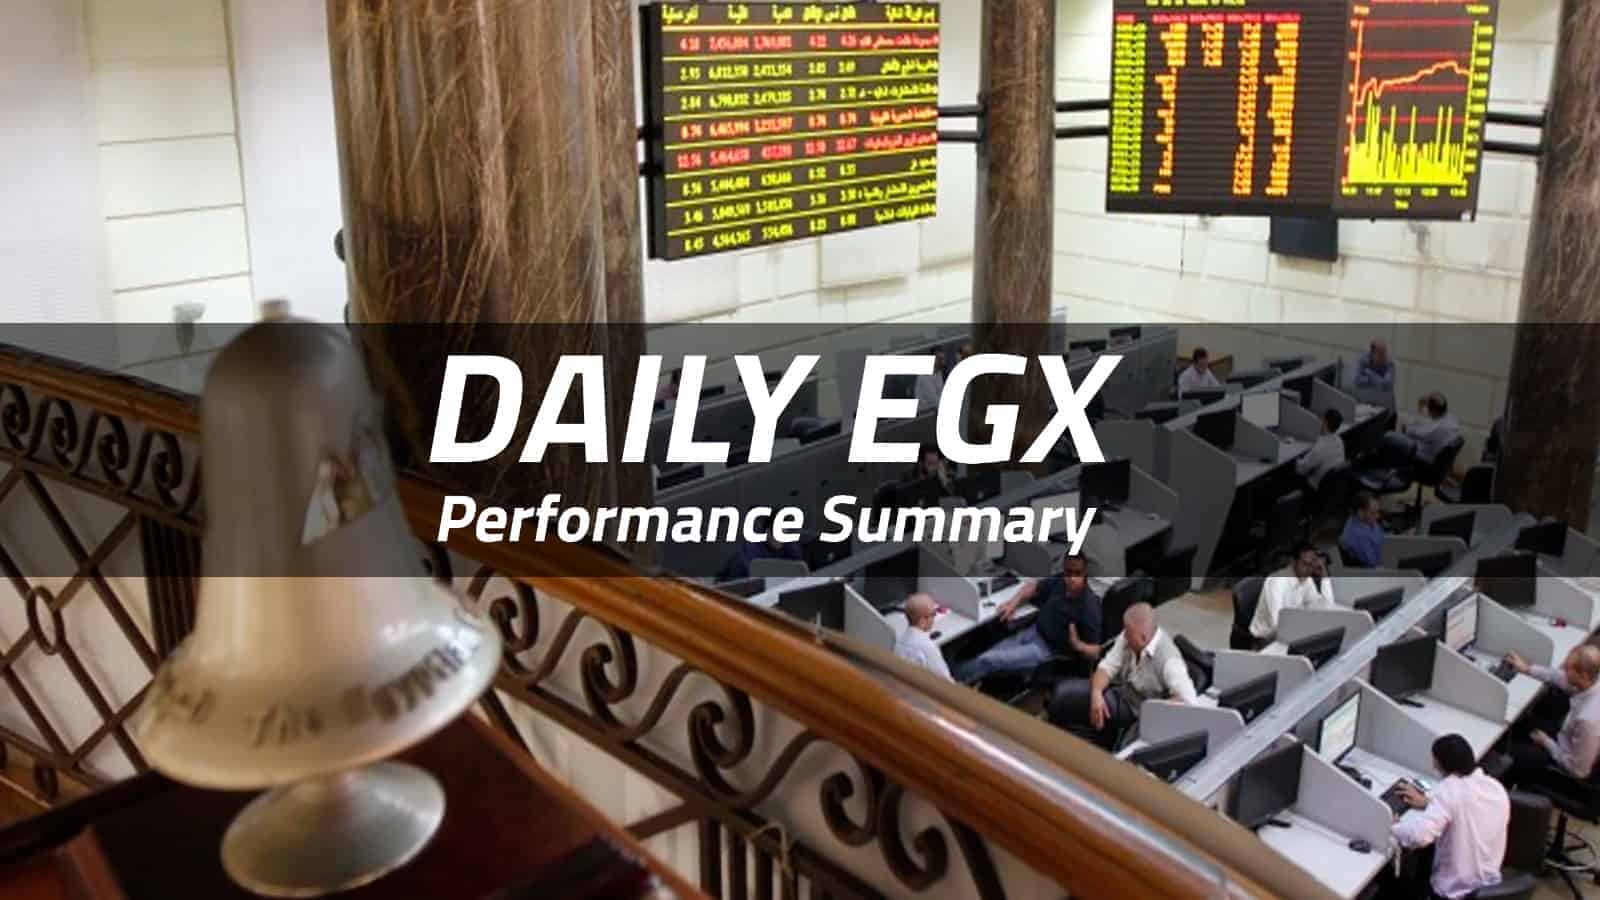 EGX sees downward trend on Monday